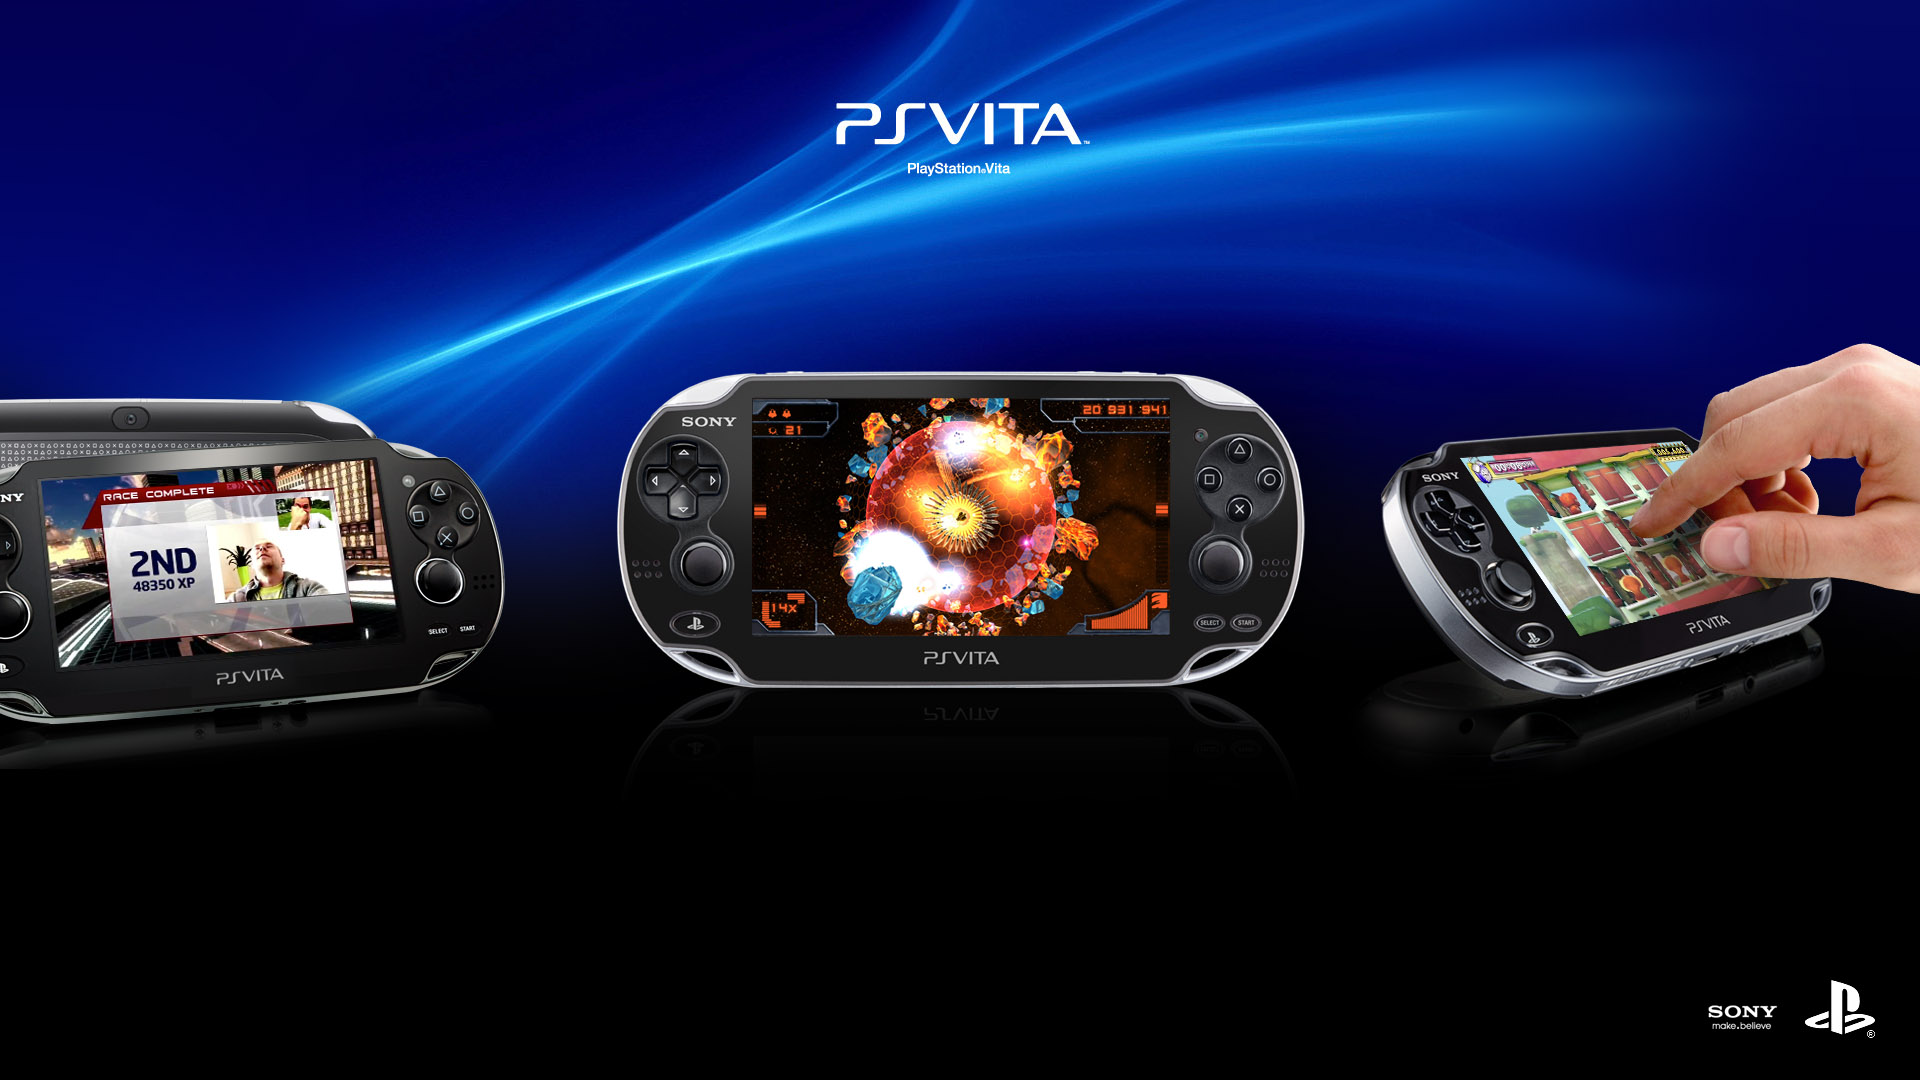 Sony Ps Vita Psp Playstation HD Image Gadgets